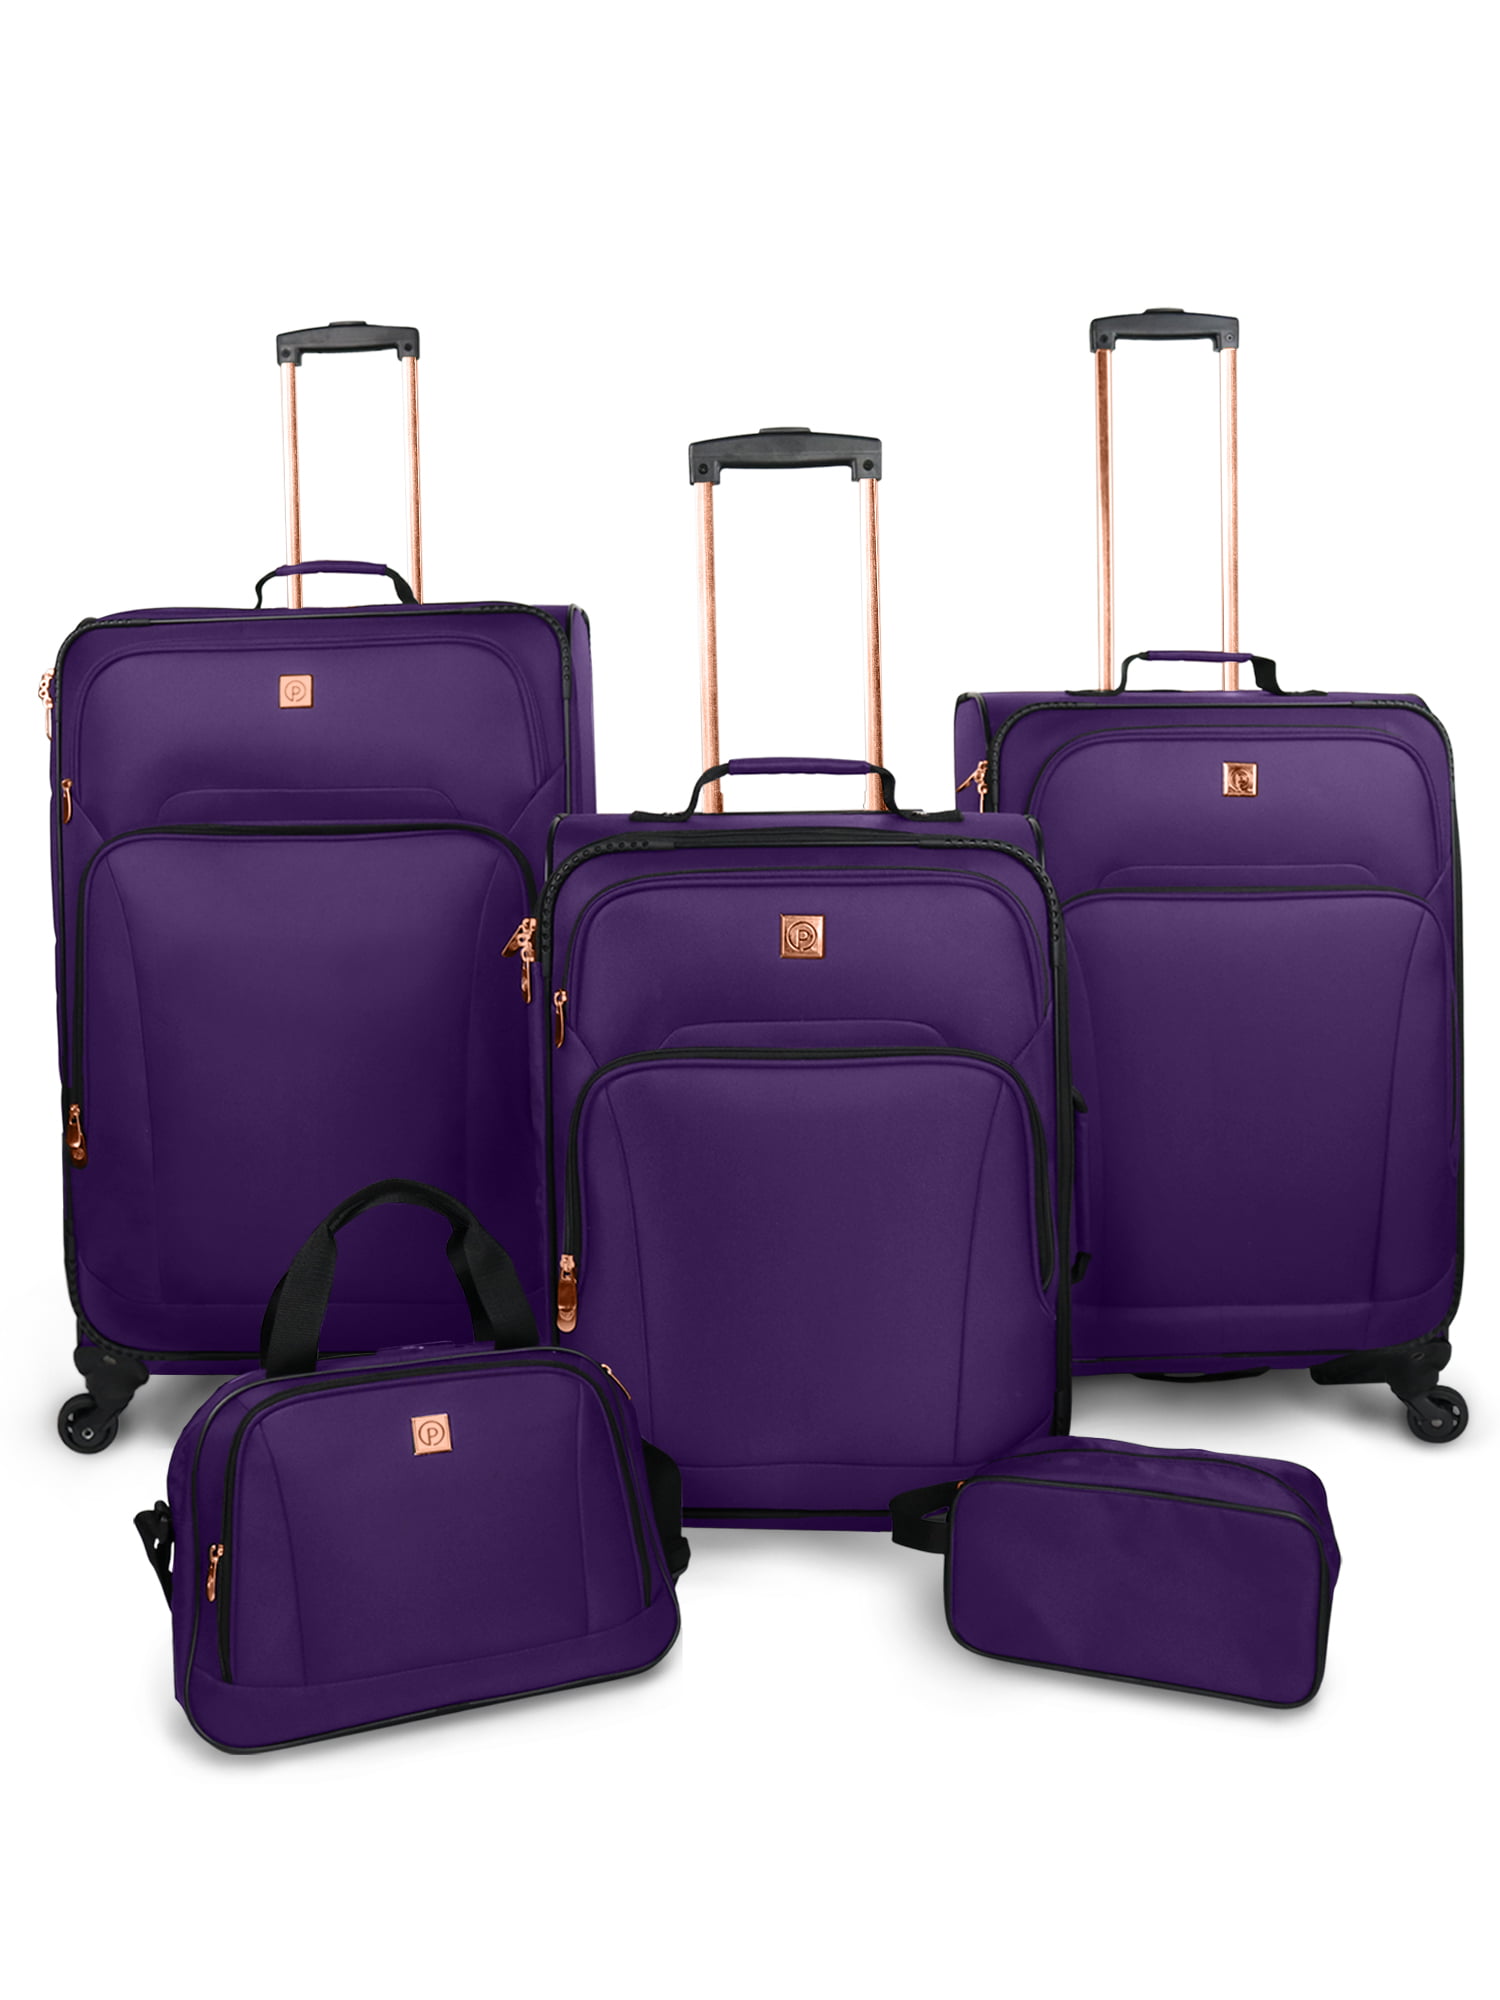 Protege 5 Piece Spinner Luggage Set - executive.iqs.edu